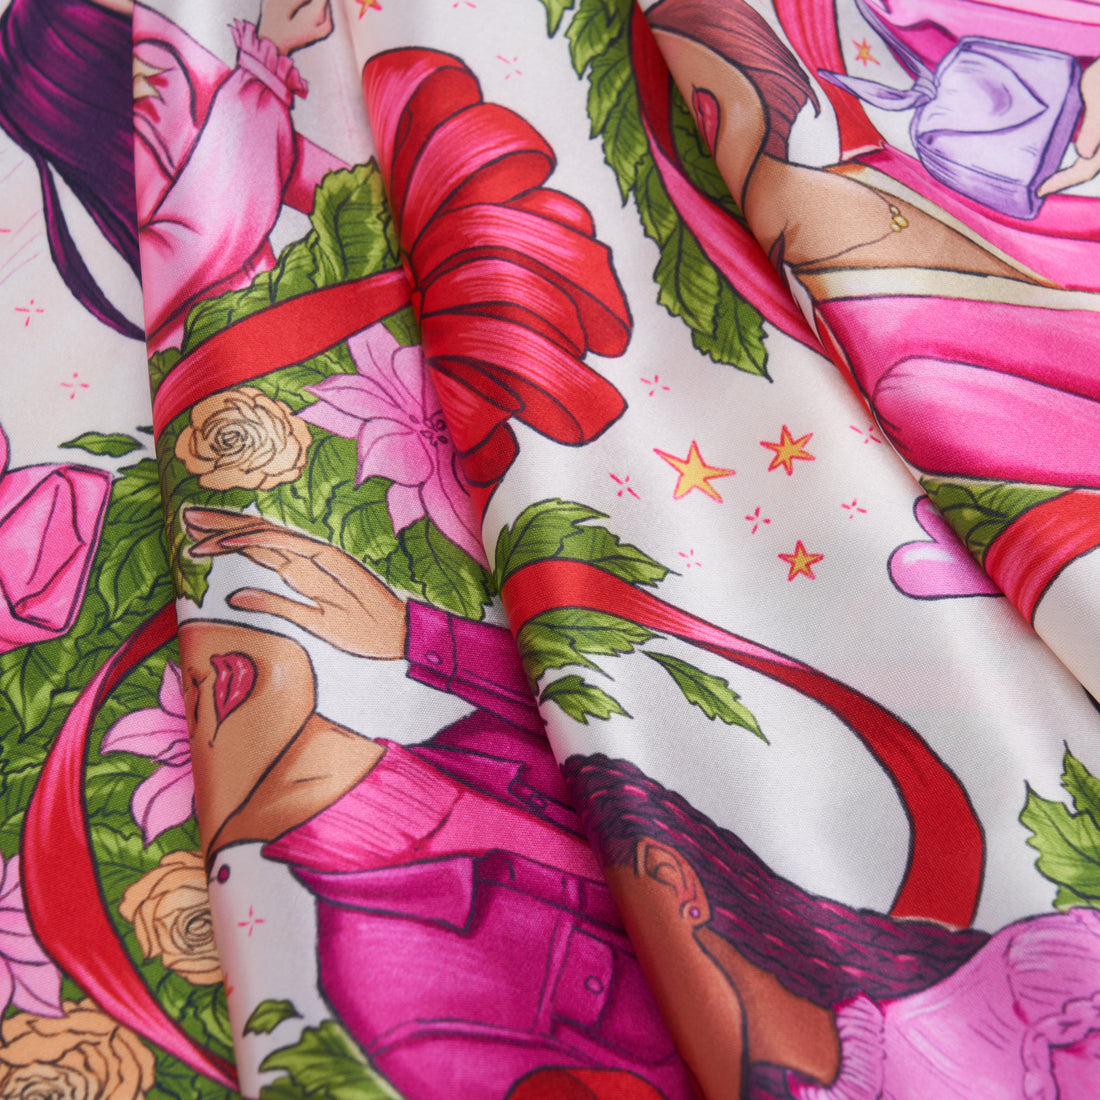 Connection | 28" Furoshiki Gift Wrap designed by Noelle Anne Navarrete